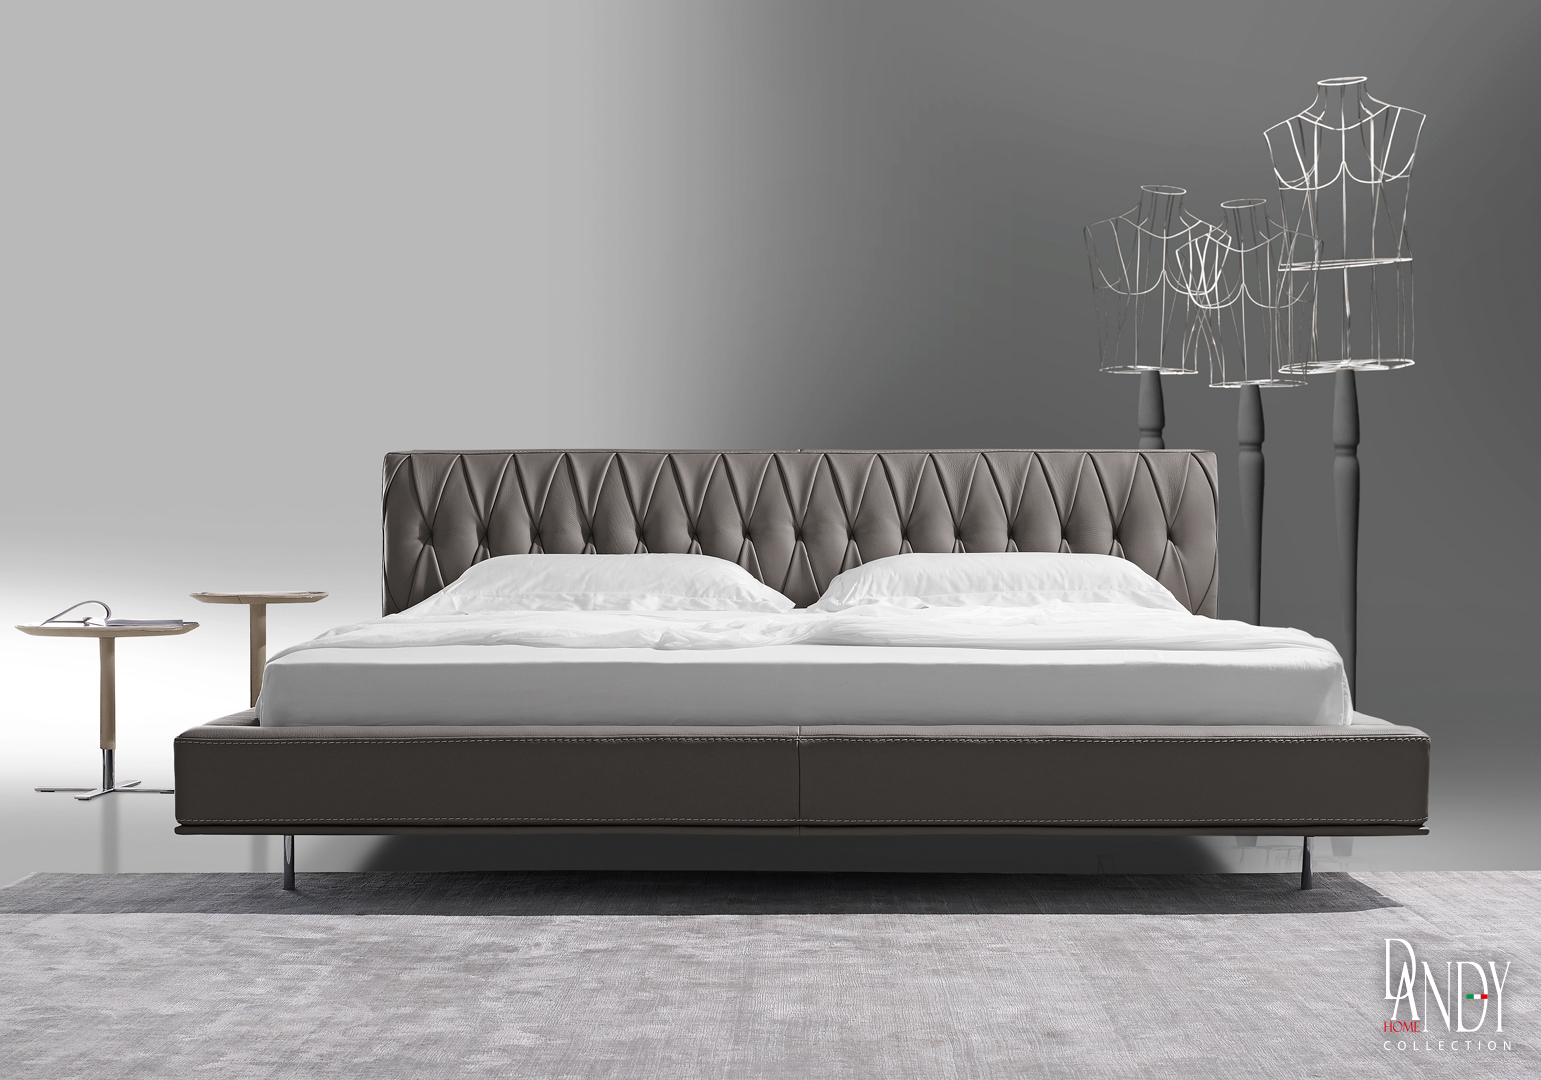 Fare Finta - LV 4 pcs bed set AED 300 2 pillowcase 1